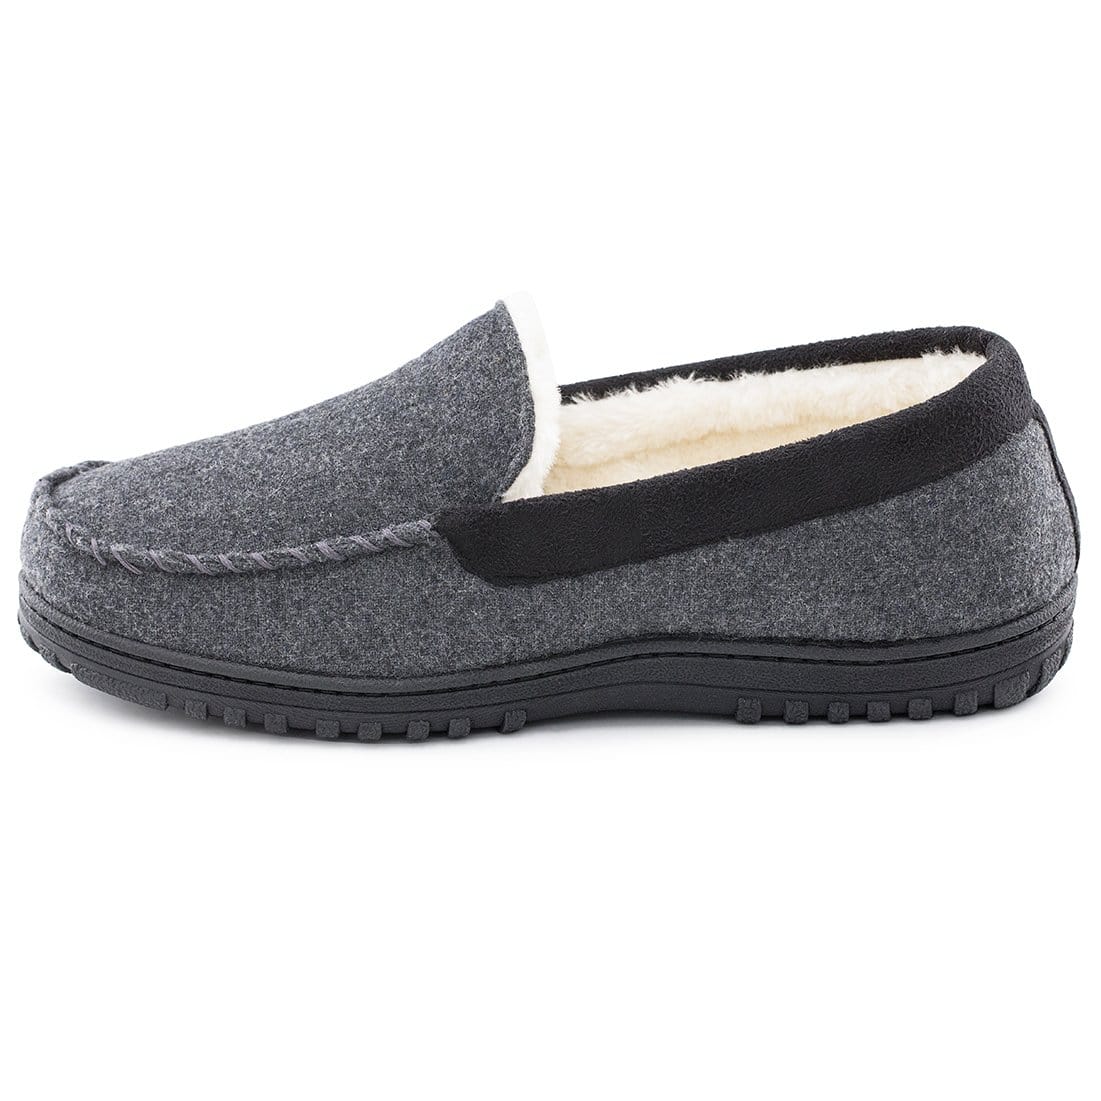 OluKai Kīpuka Hulu Indoor/Outdoor Slipper Black (Men's) | Mar-Lou Shoes